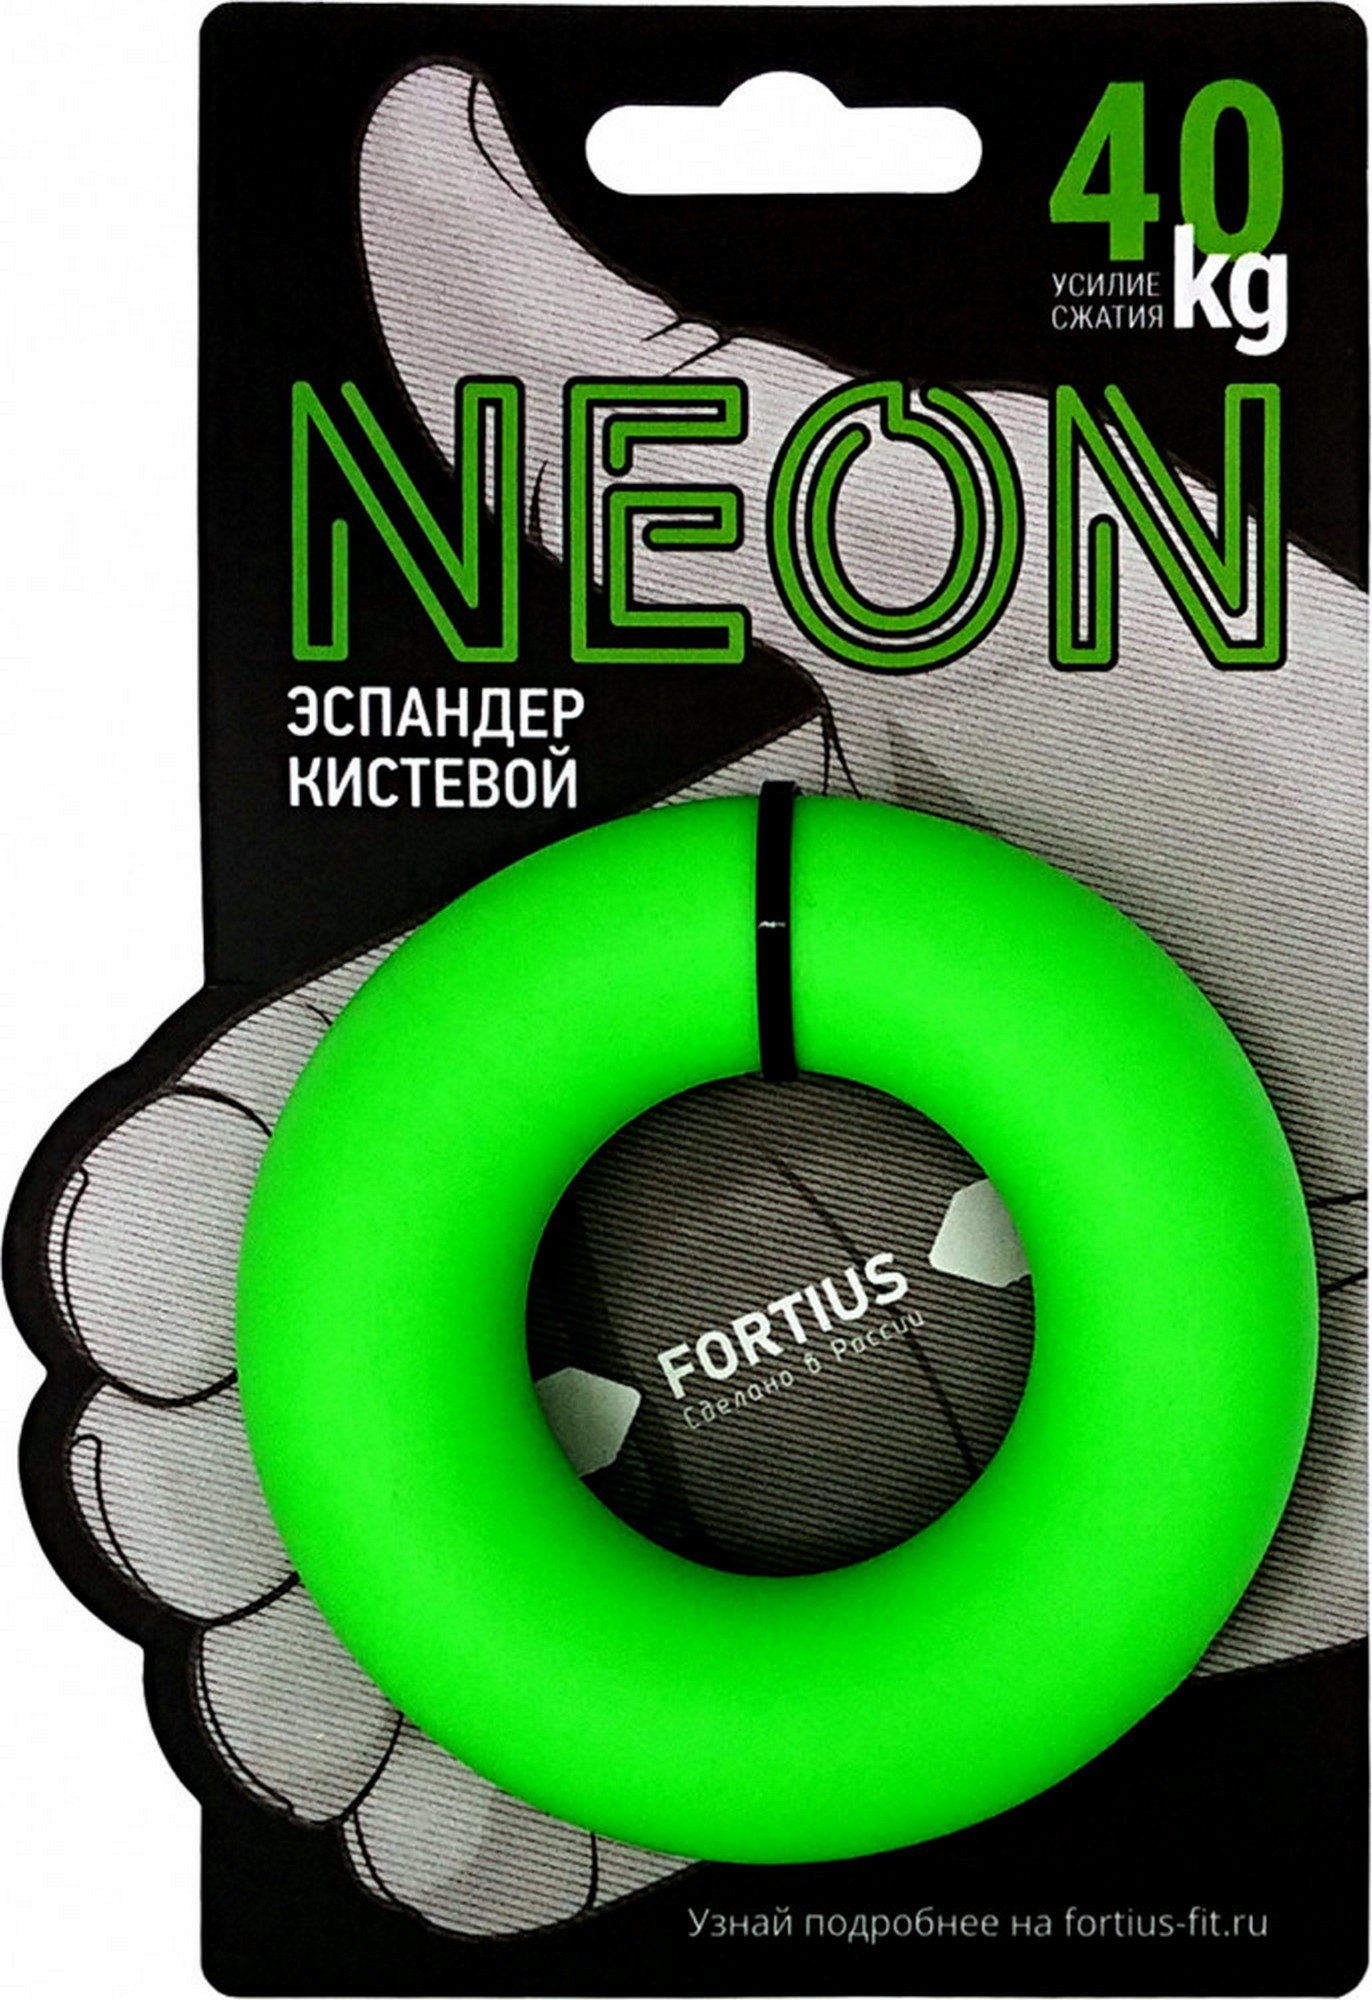 Эспандер кистевой Fortius Neon 40 кг H180701-40FG зеленый 1372_2000